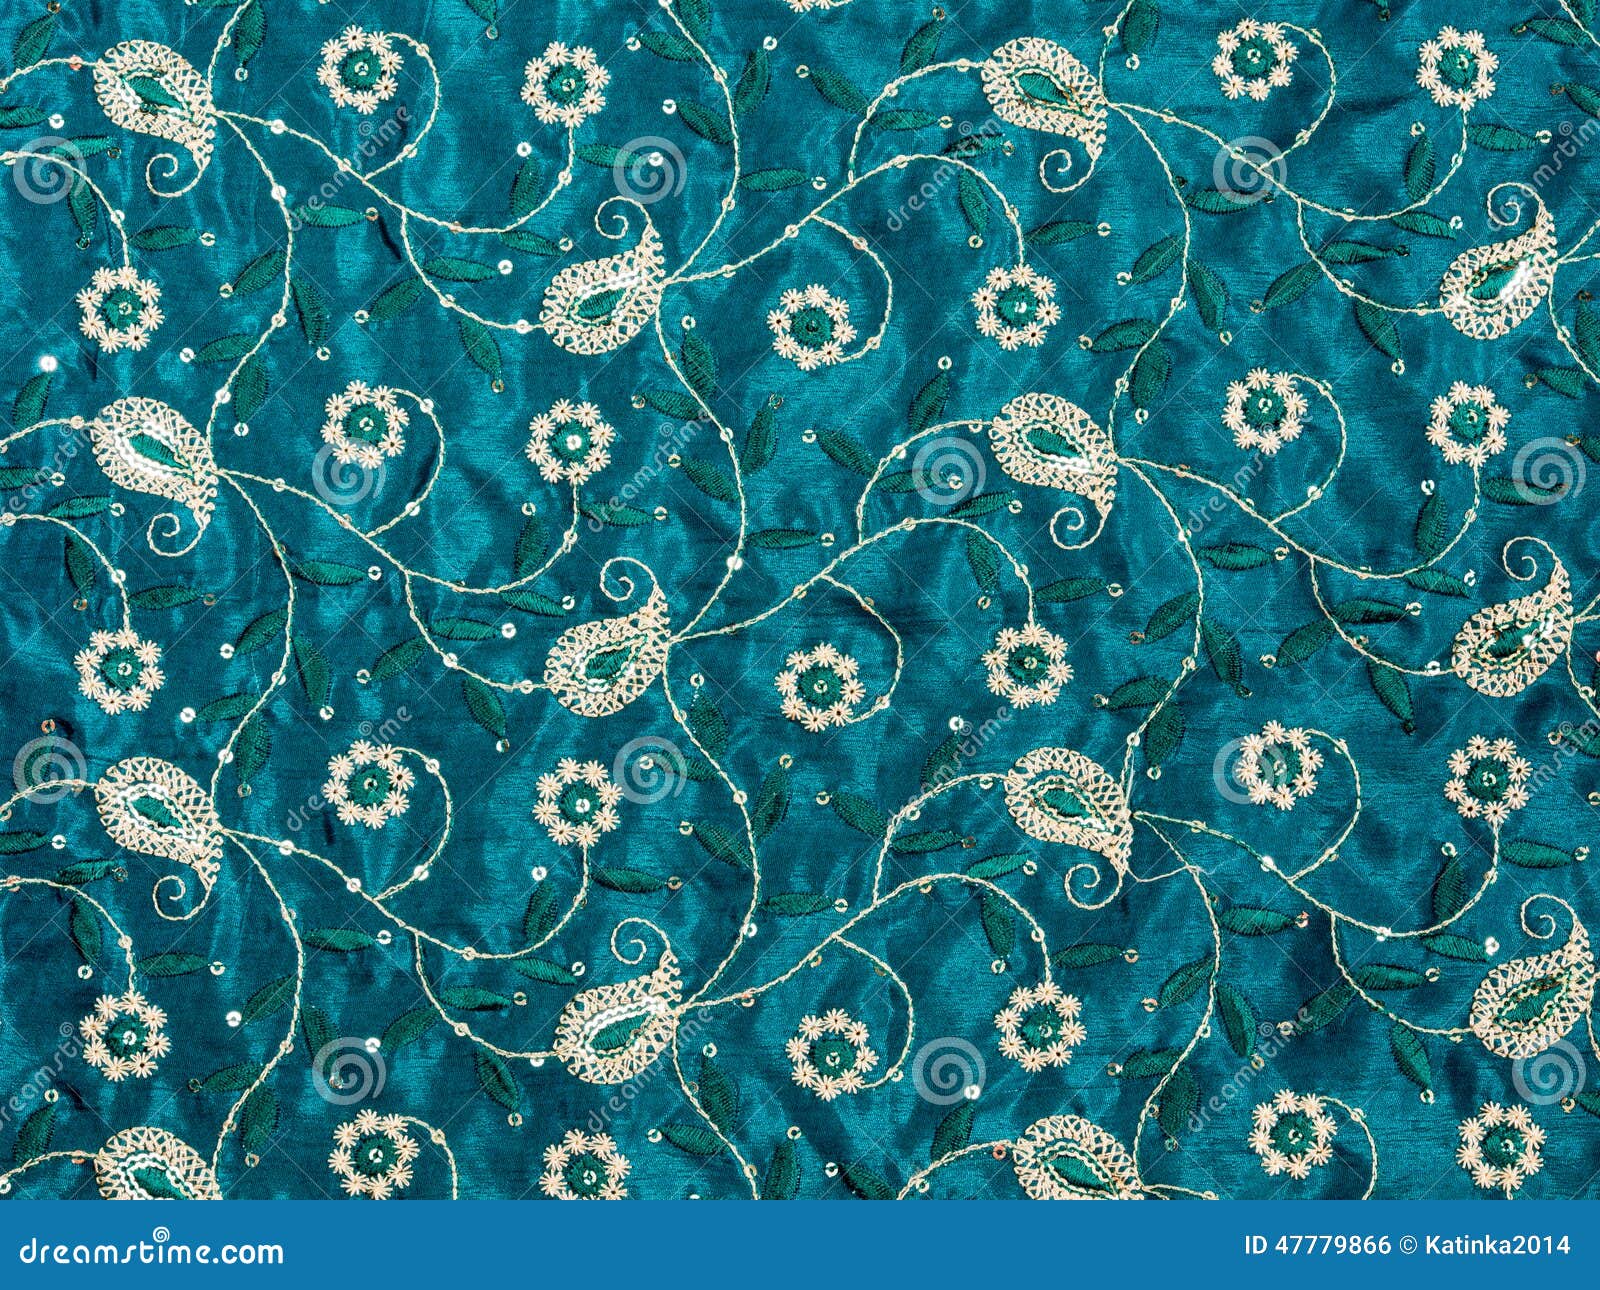 Indian fabric texture stock photo. Image of design, fiber - 47779866